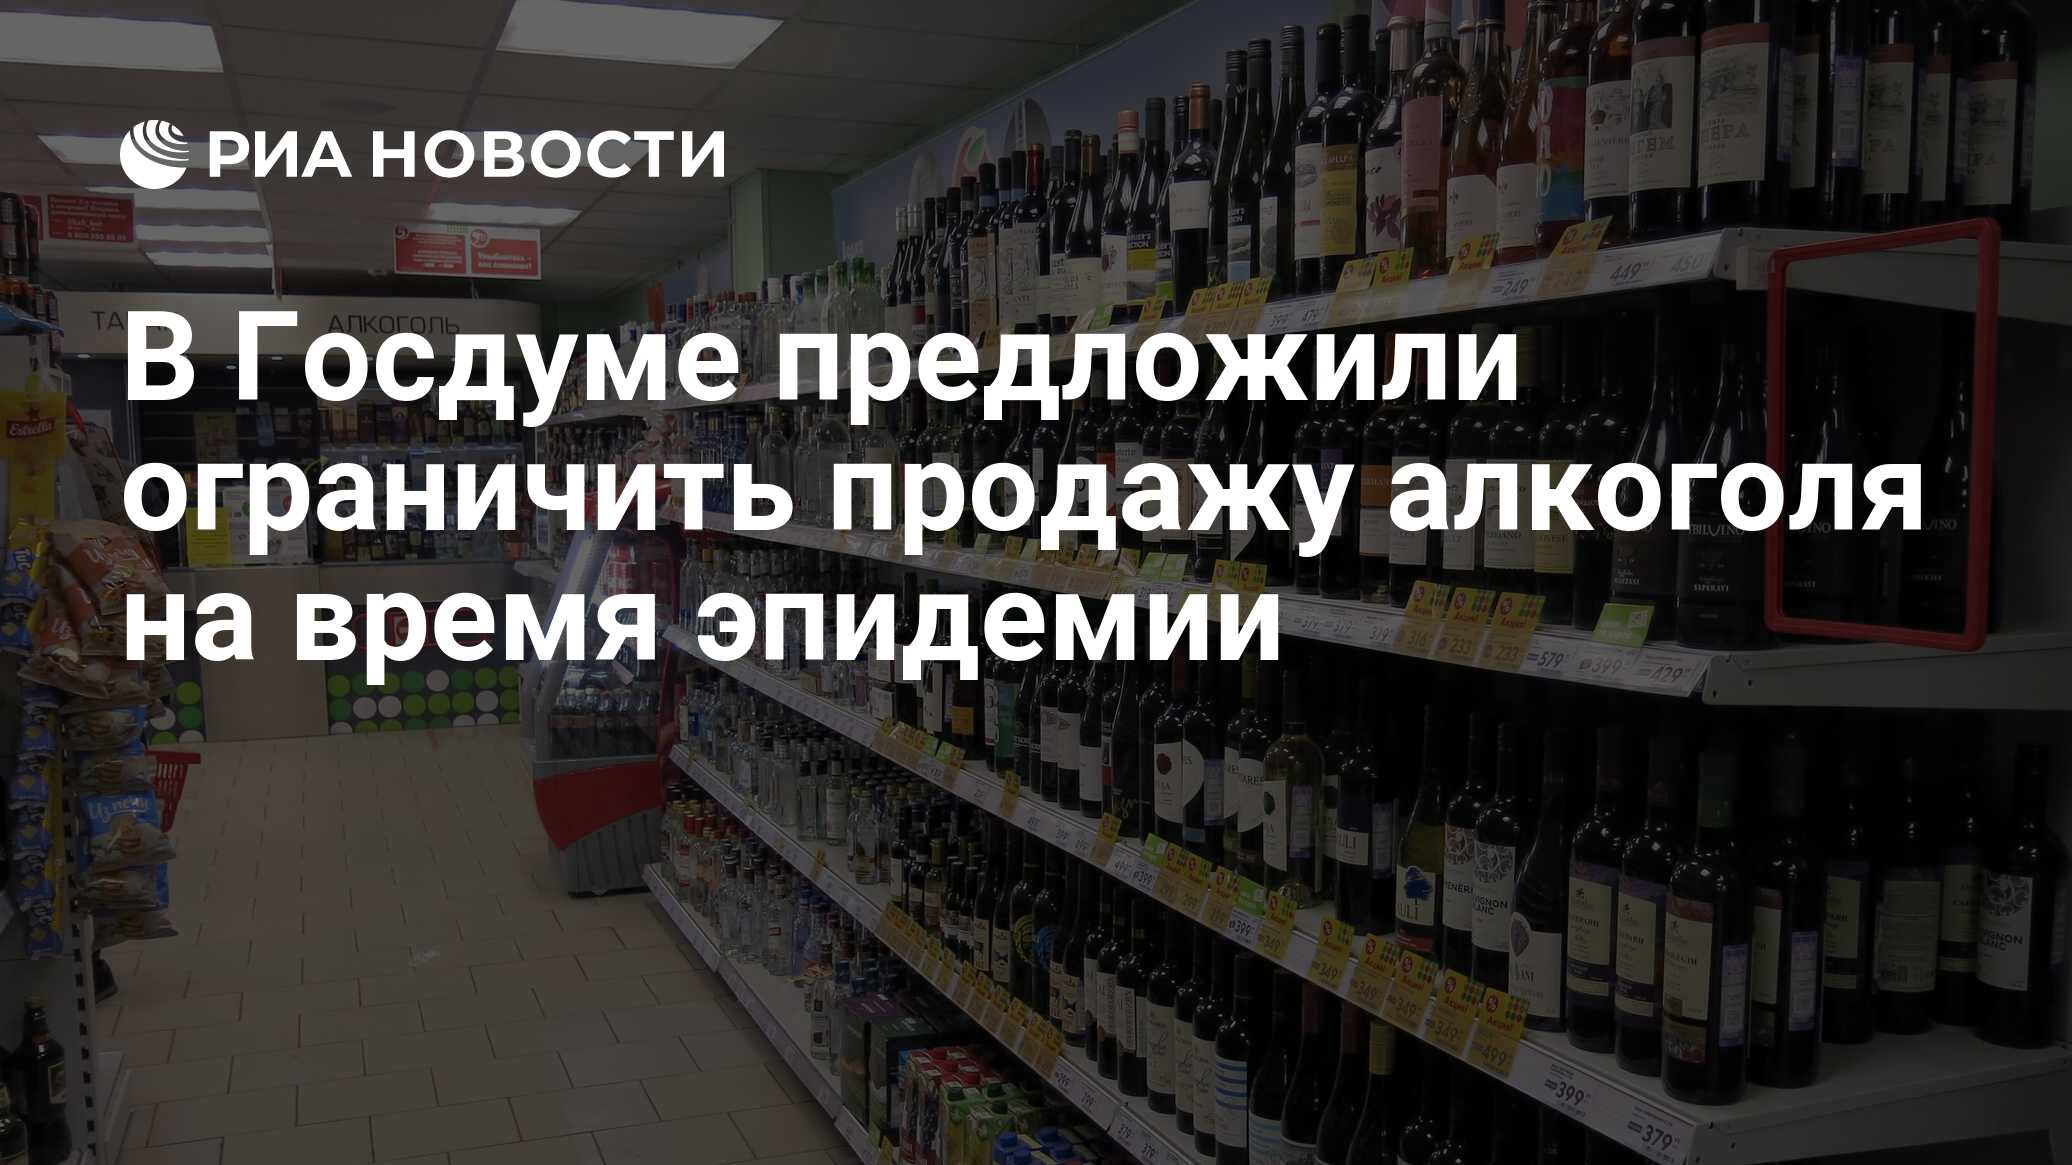 Со своим алкоголем воронеж. До скольки часов продают алкоголь. Со скольки часов продают алкоголь в магазине. Со скольки продают алкоголь в Татарстане.